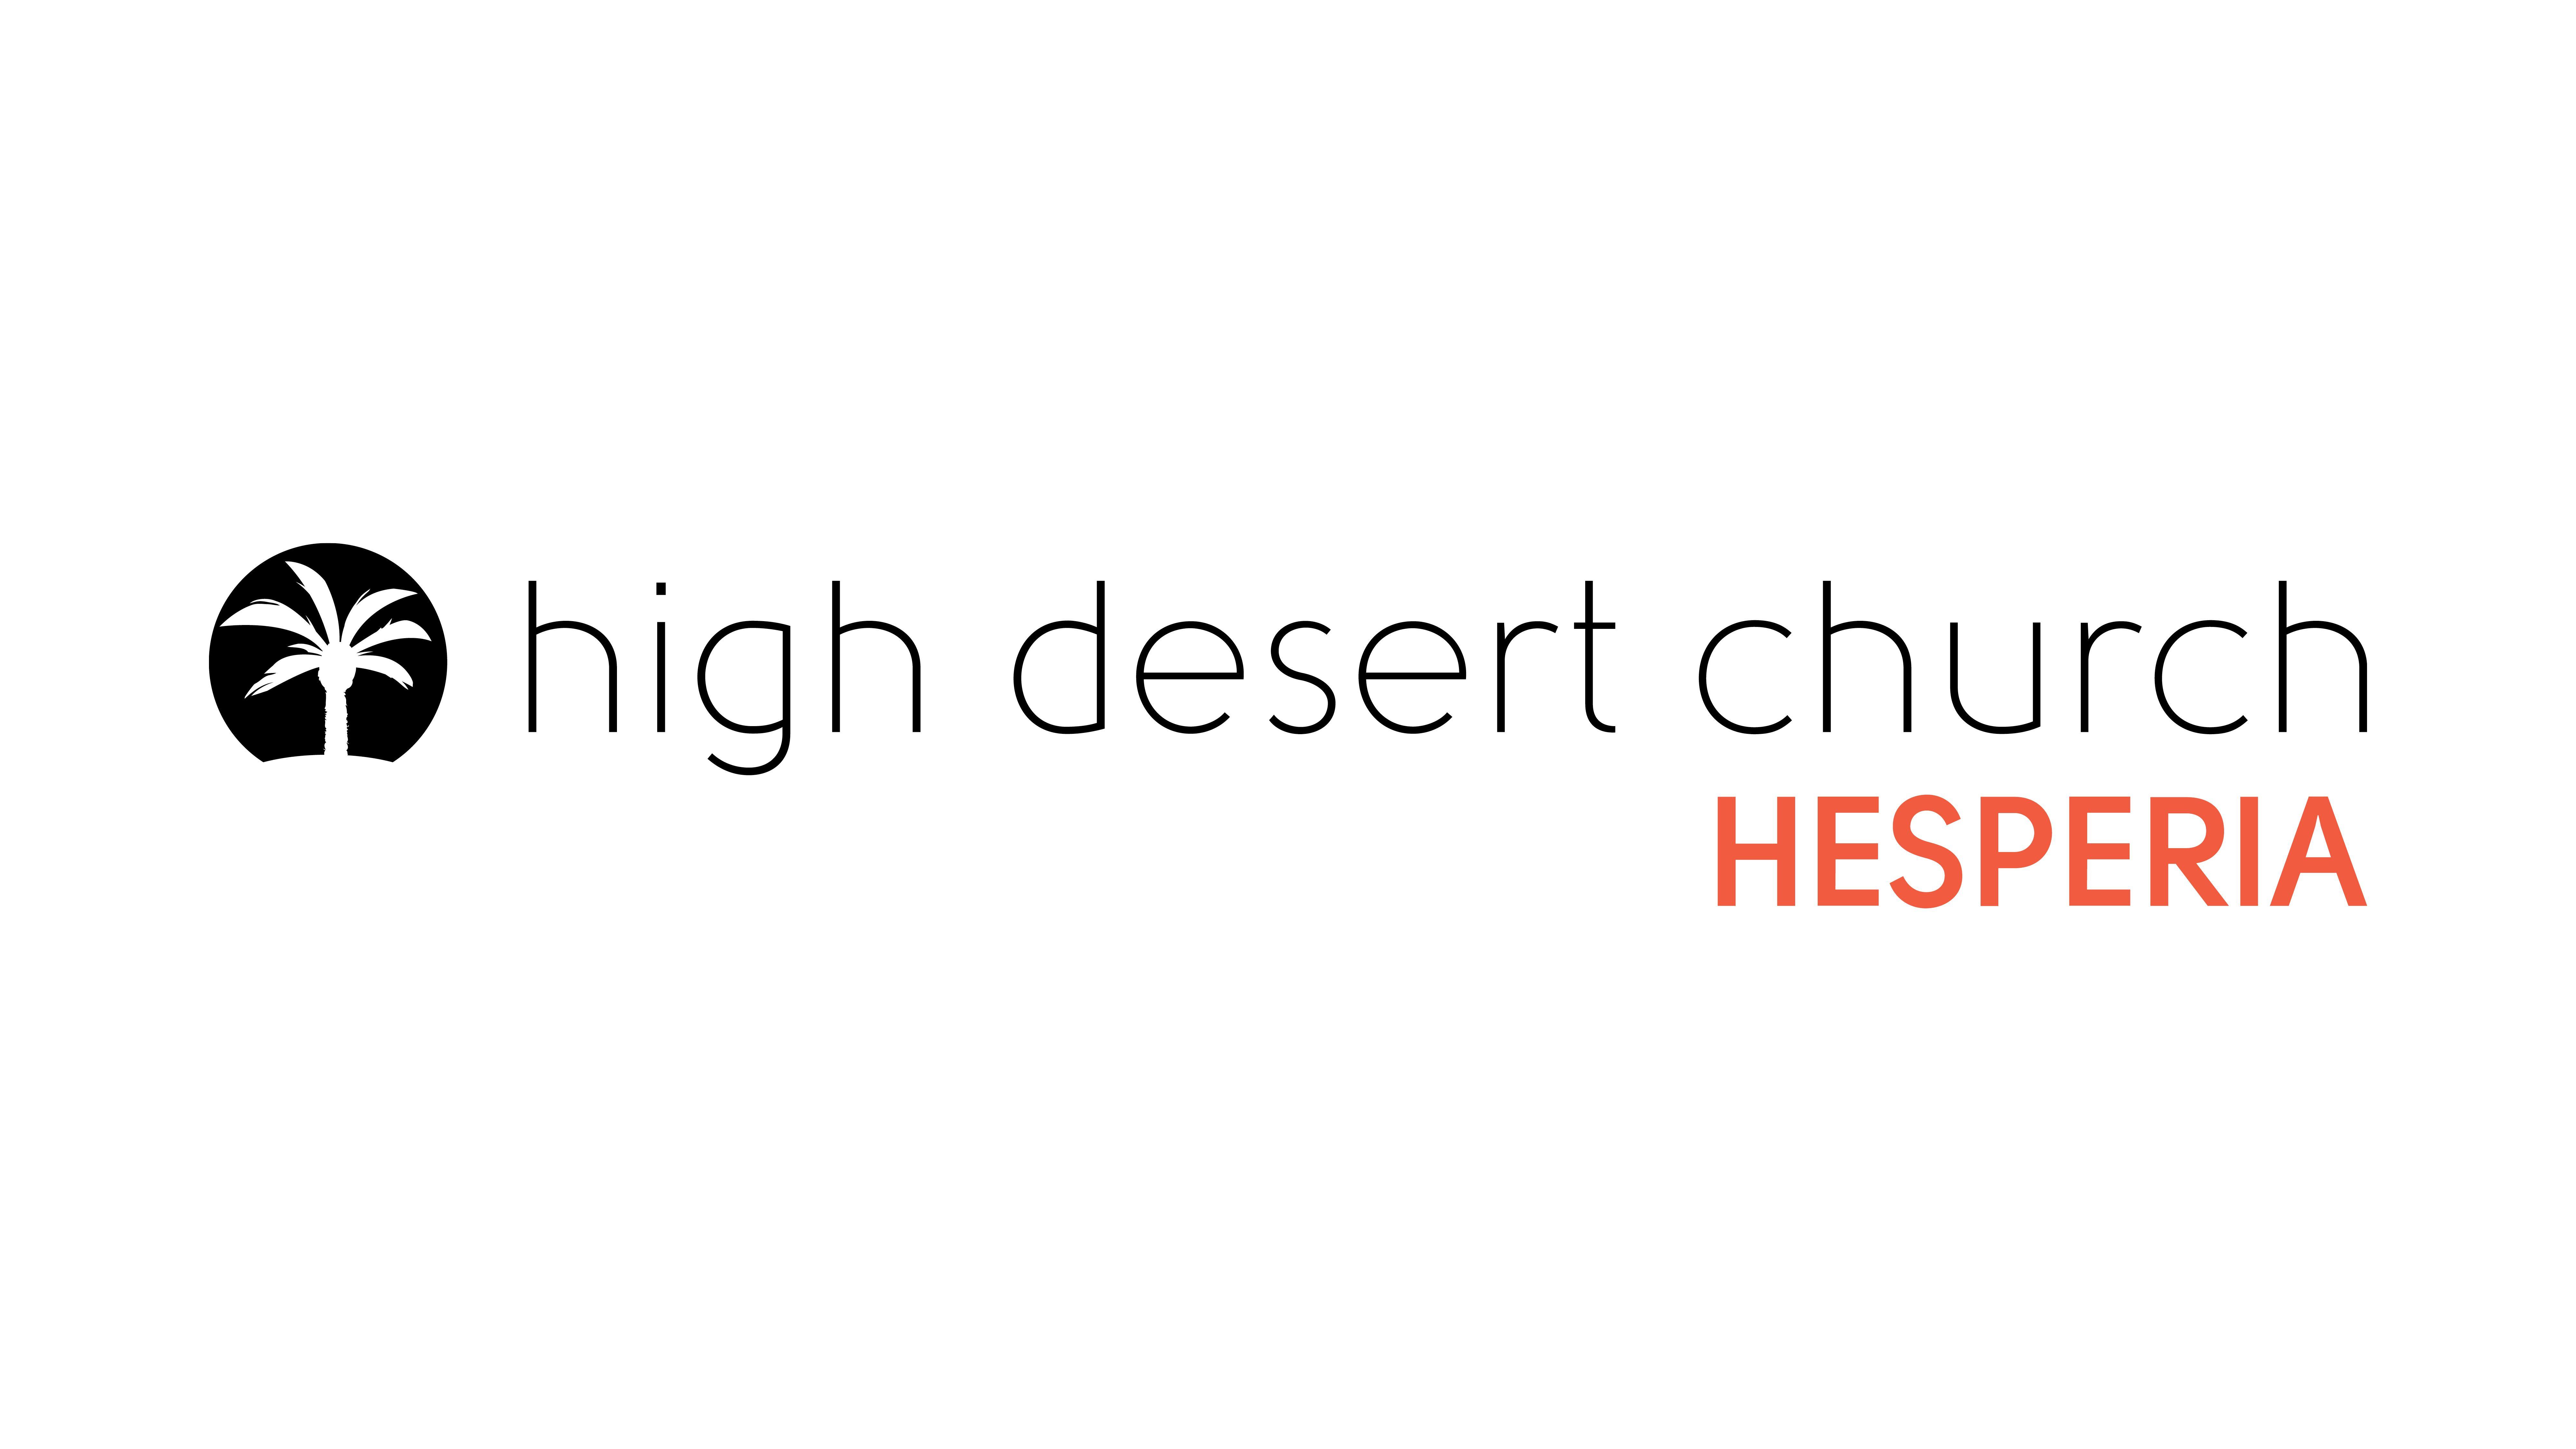 Hesperia Logo - High Desert Church